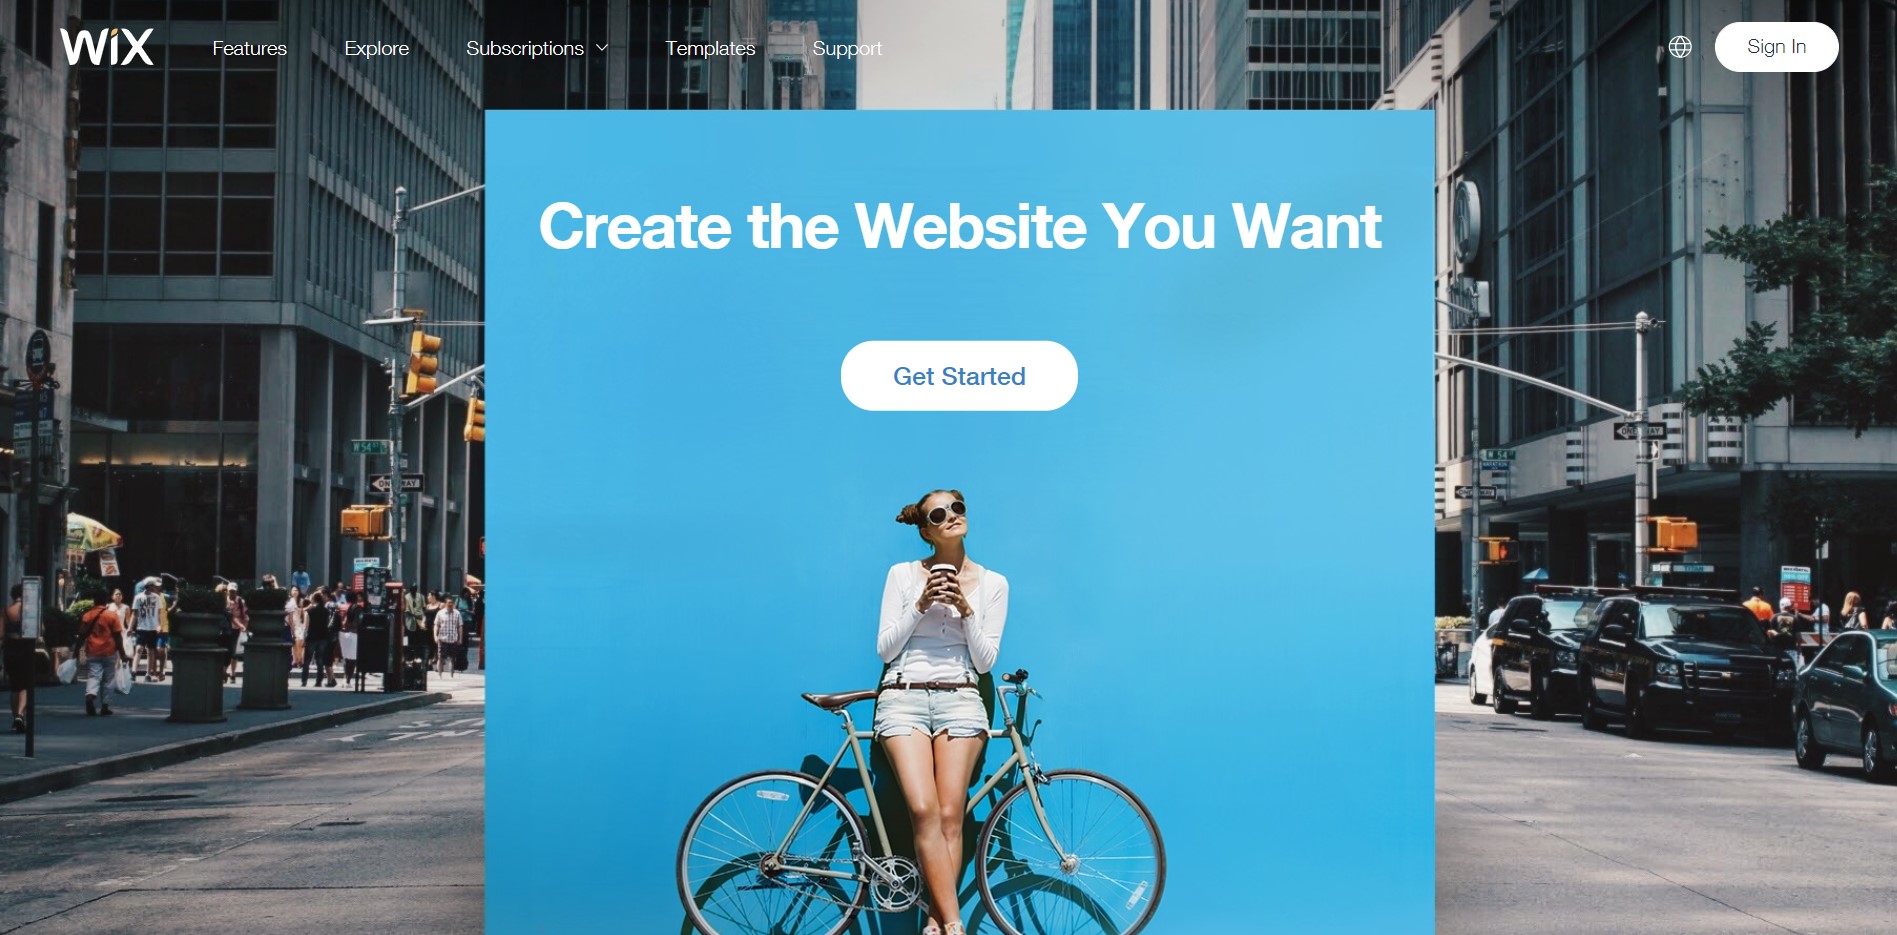 marketing plan- homepage of wix